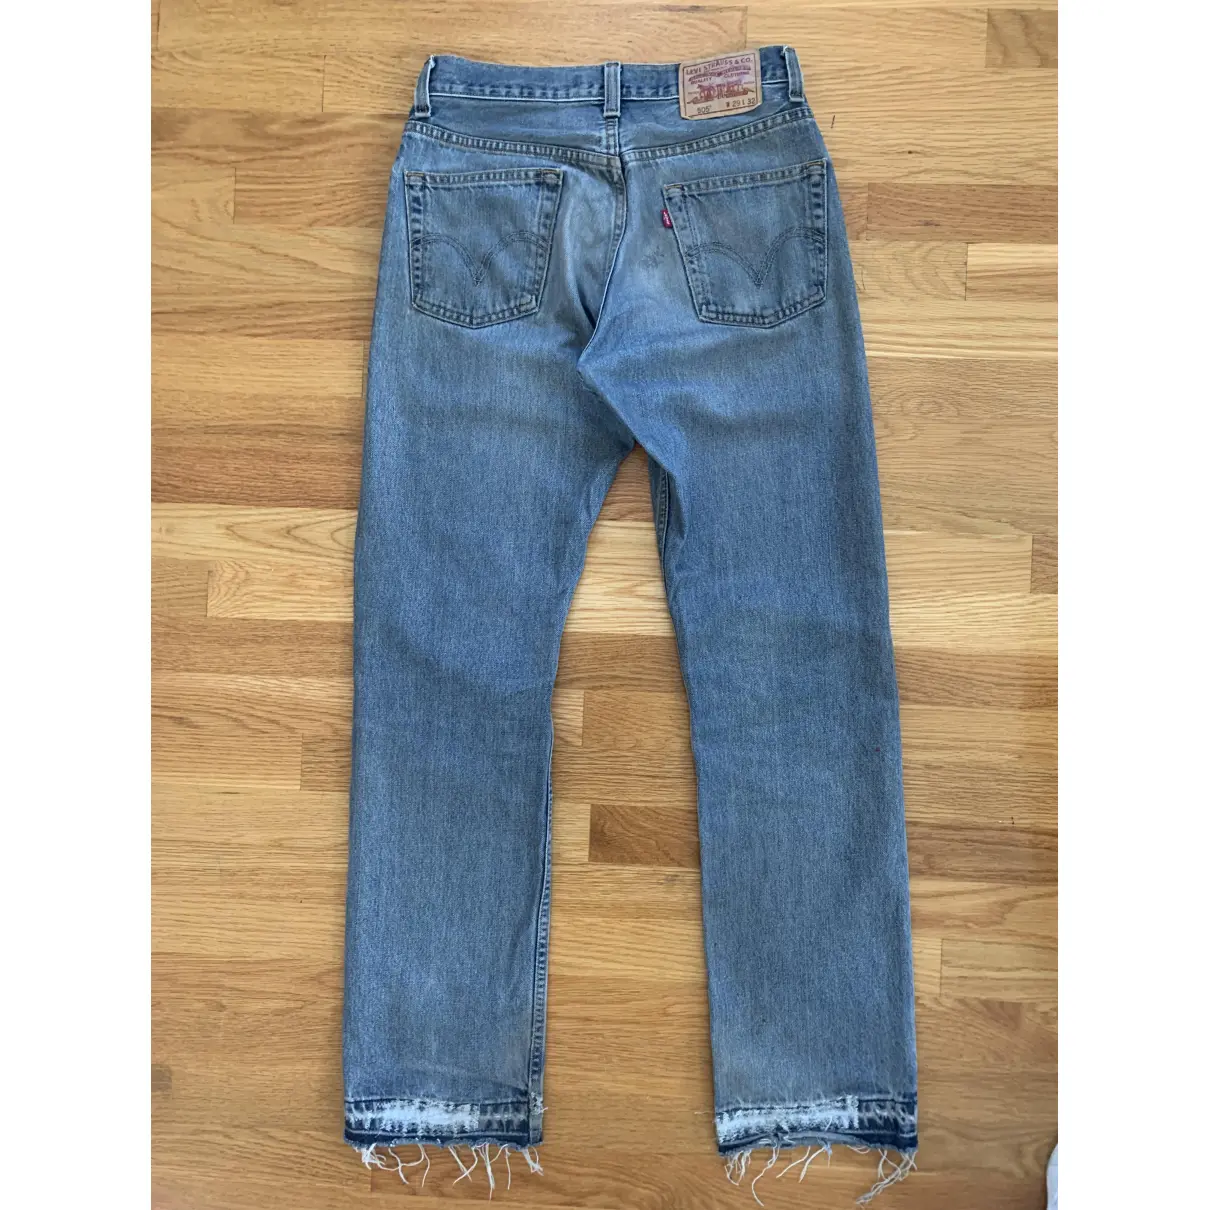 Buy Levi's Straight jeans online - Vintage